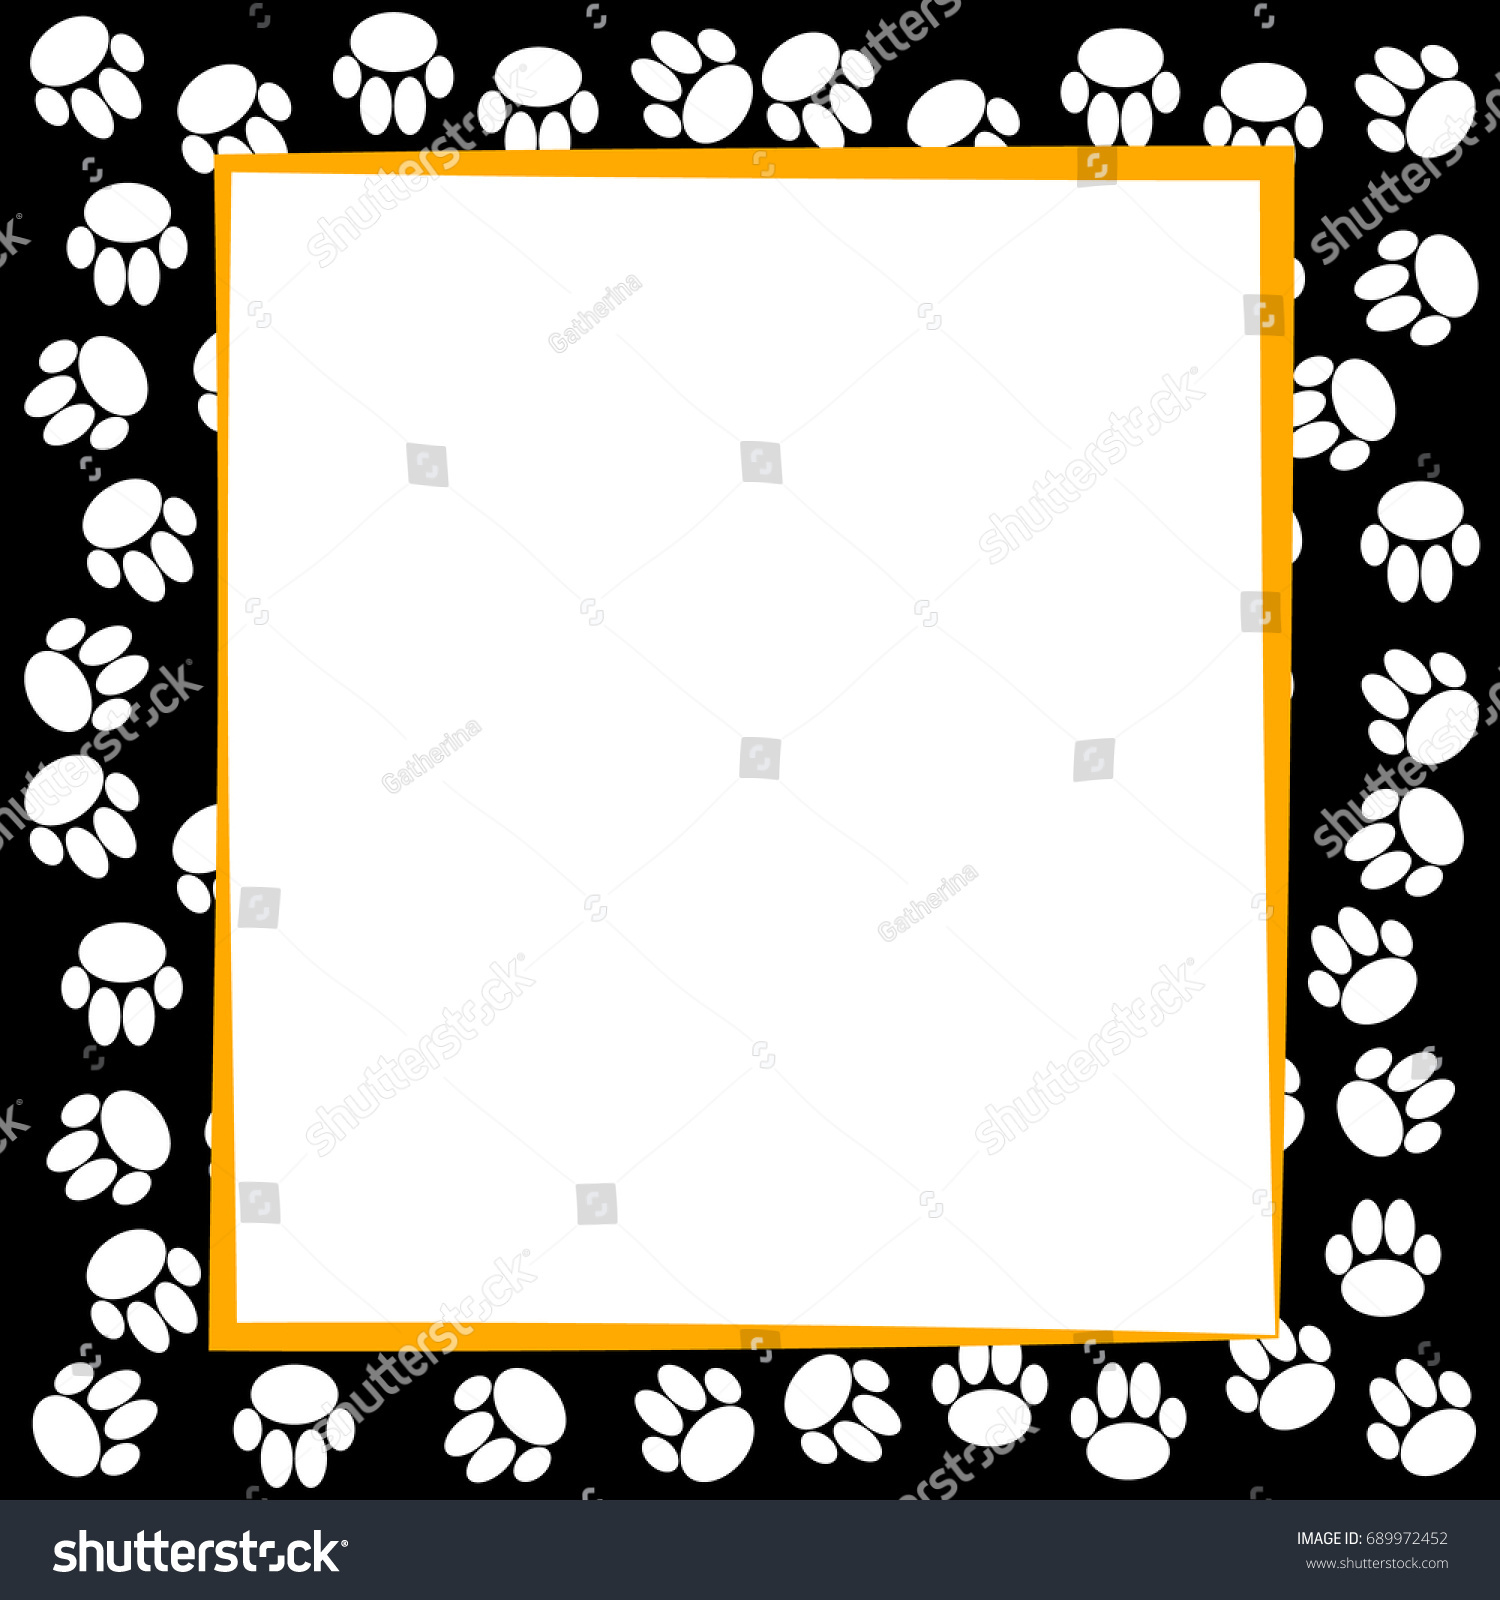 Dog Paws Border On Black Background Stock Vector (2018) 689972452 ...